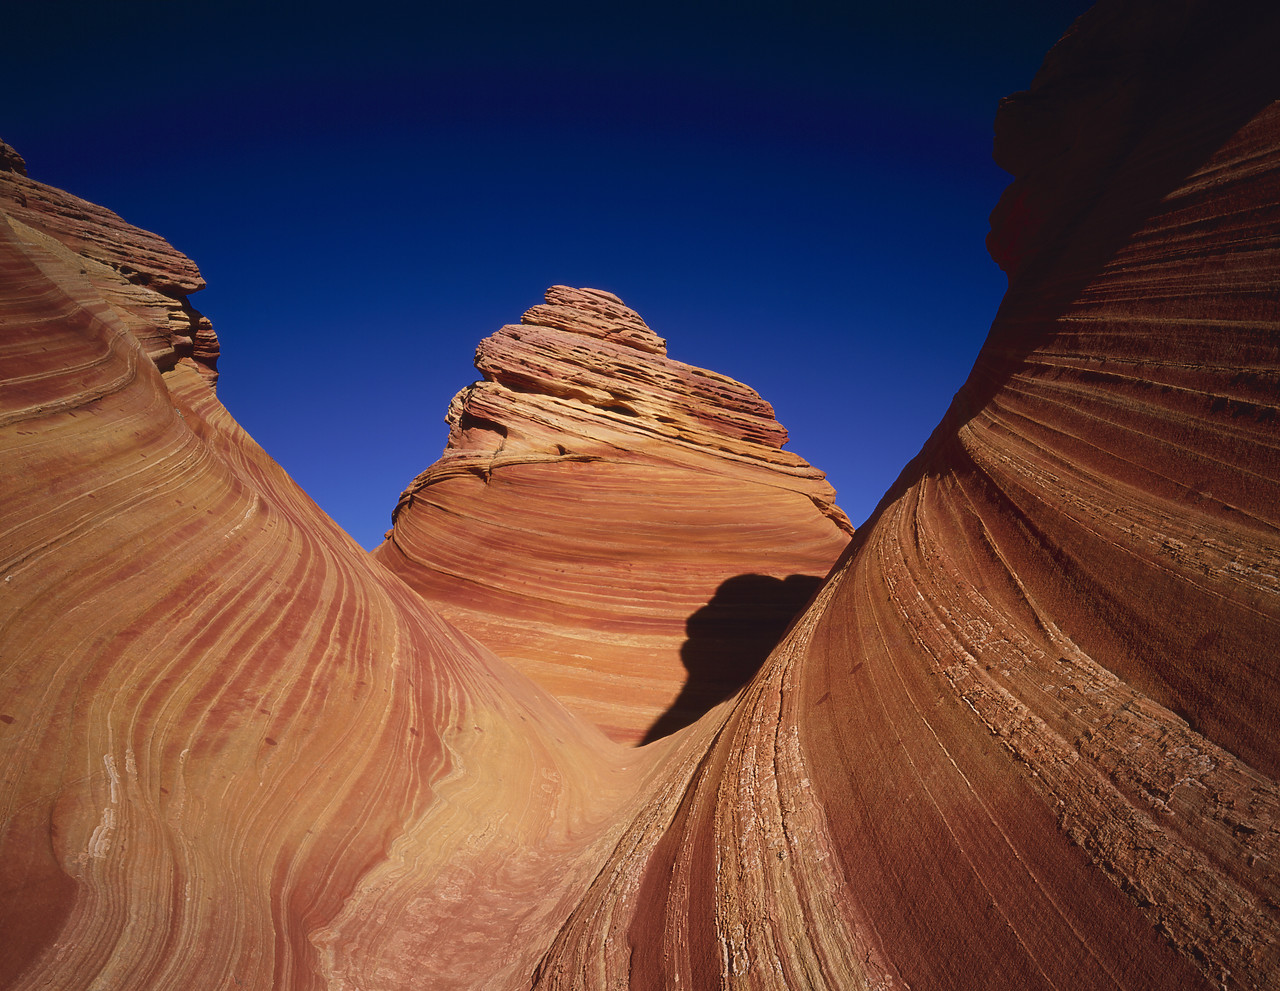 #966218-1 - Sandstone Hoodoo Formation, Paria Canyon, Arizona, USA